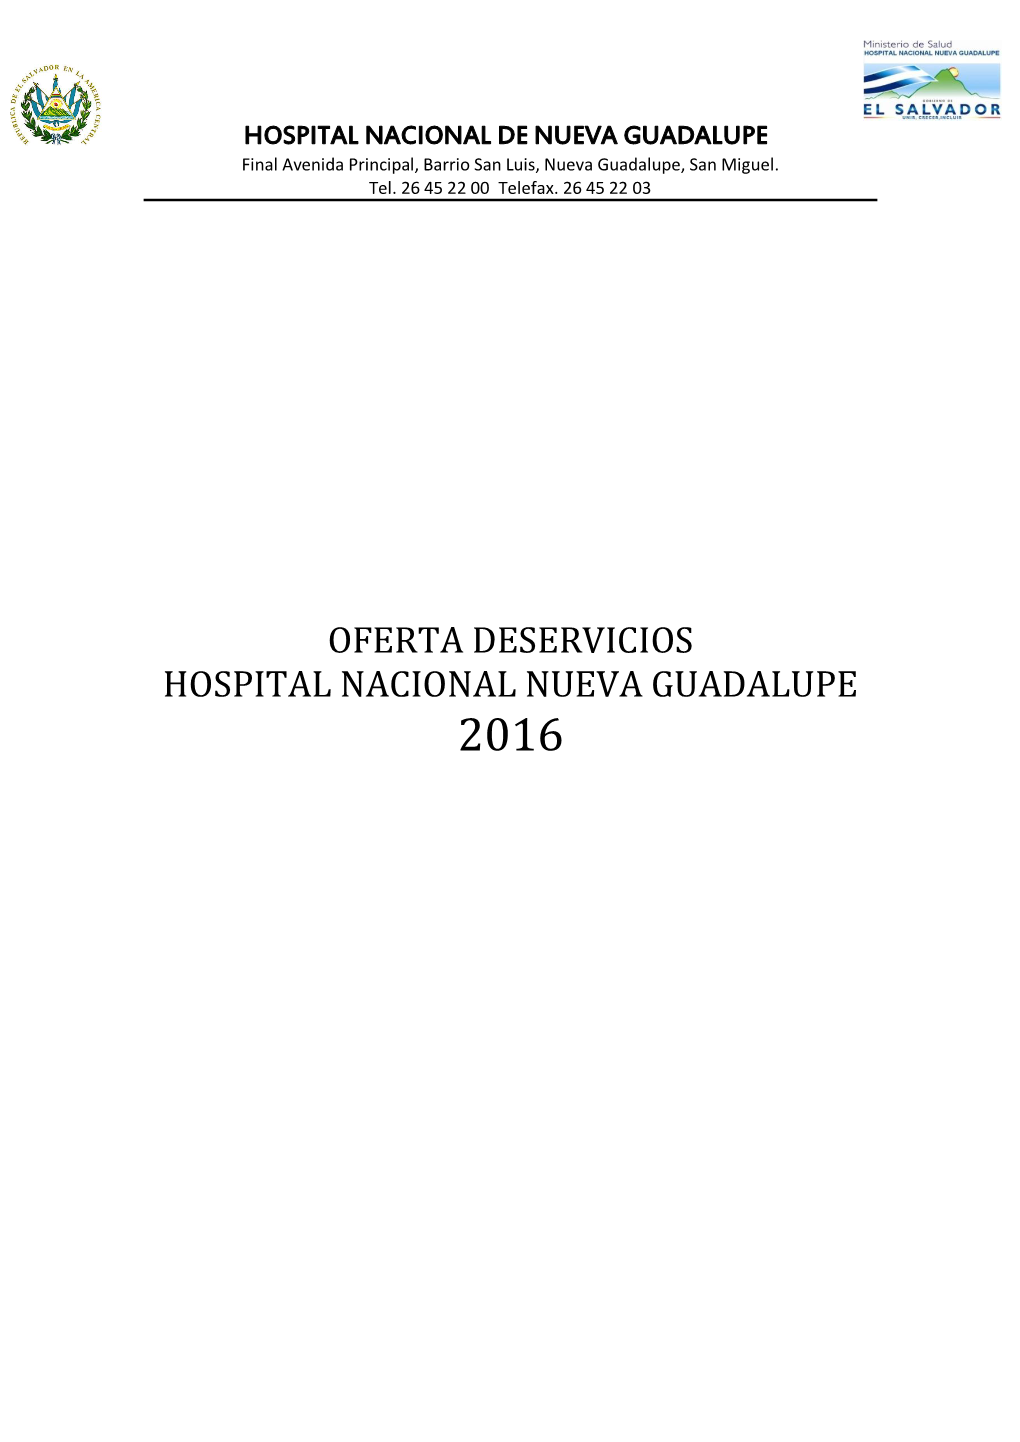 Oferta Deservicios Hospital Nacional Nueva Guadalupe 2016